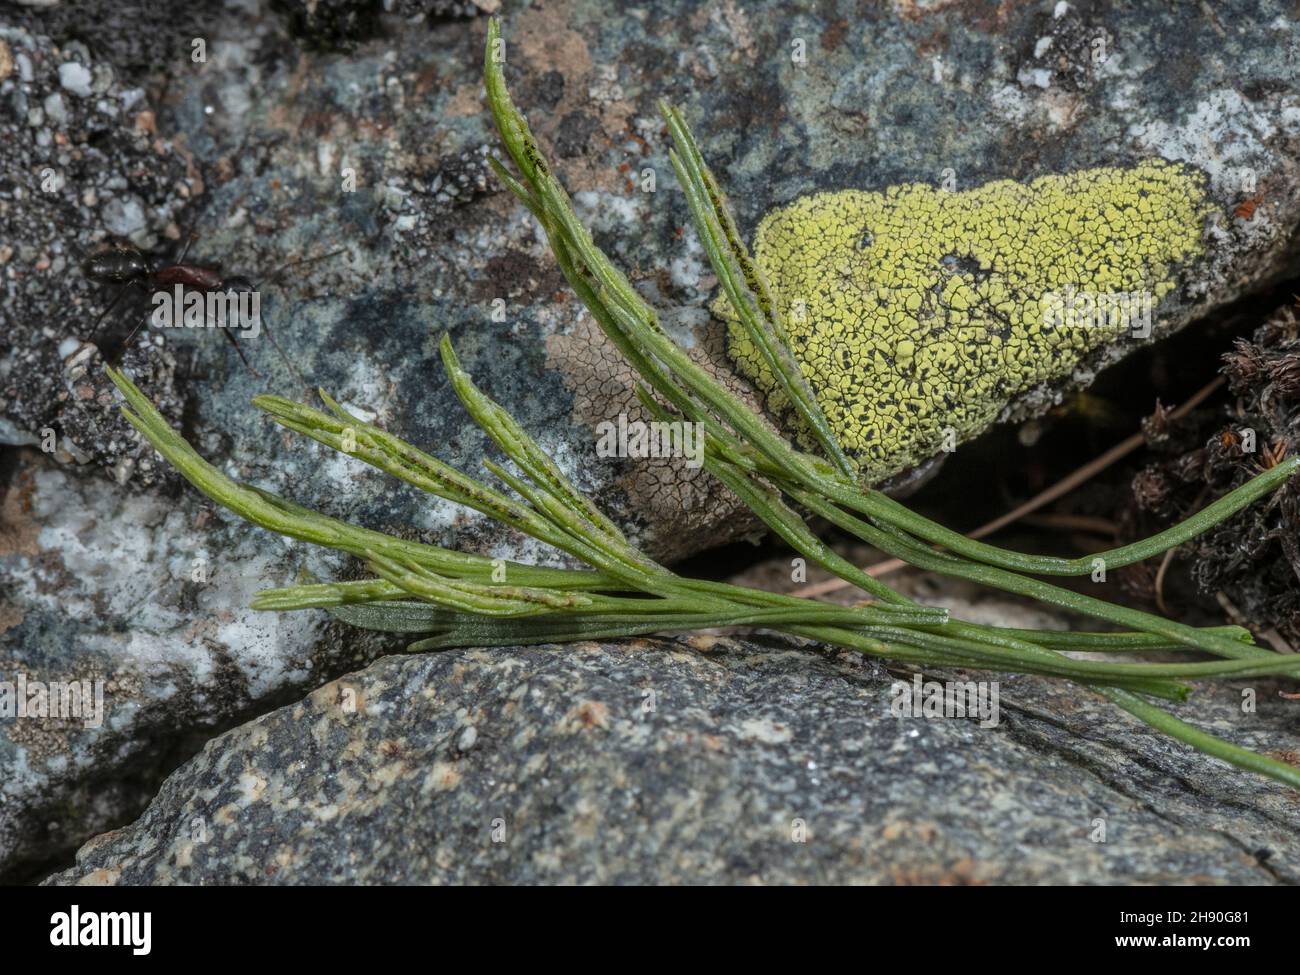 Forked spleenwort, Asplenium septentrionale, showing ripe sori on undersides of fronds. Stock Photo